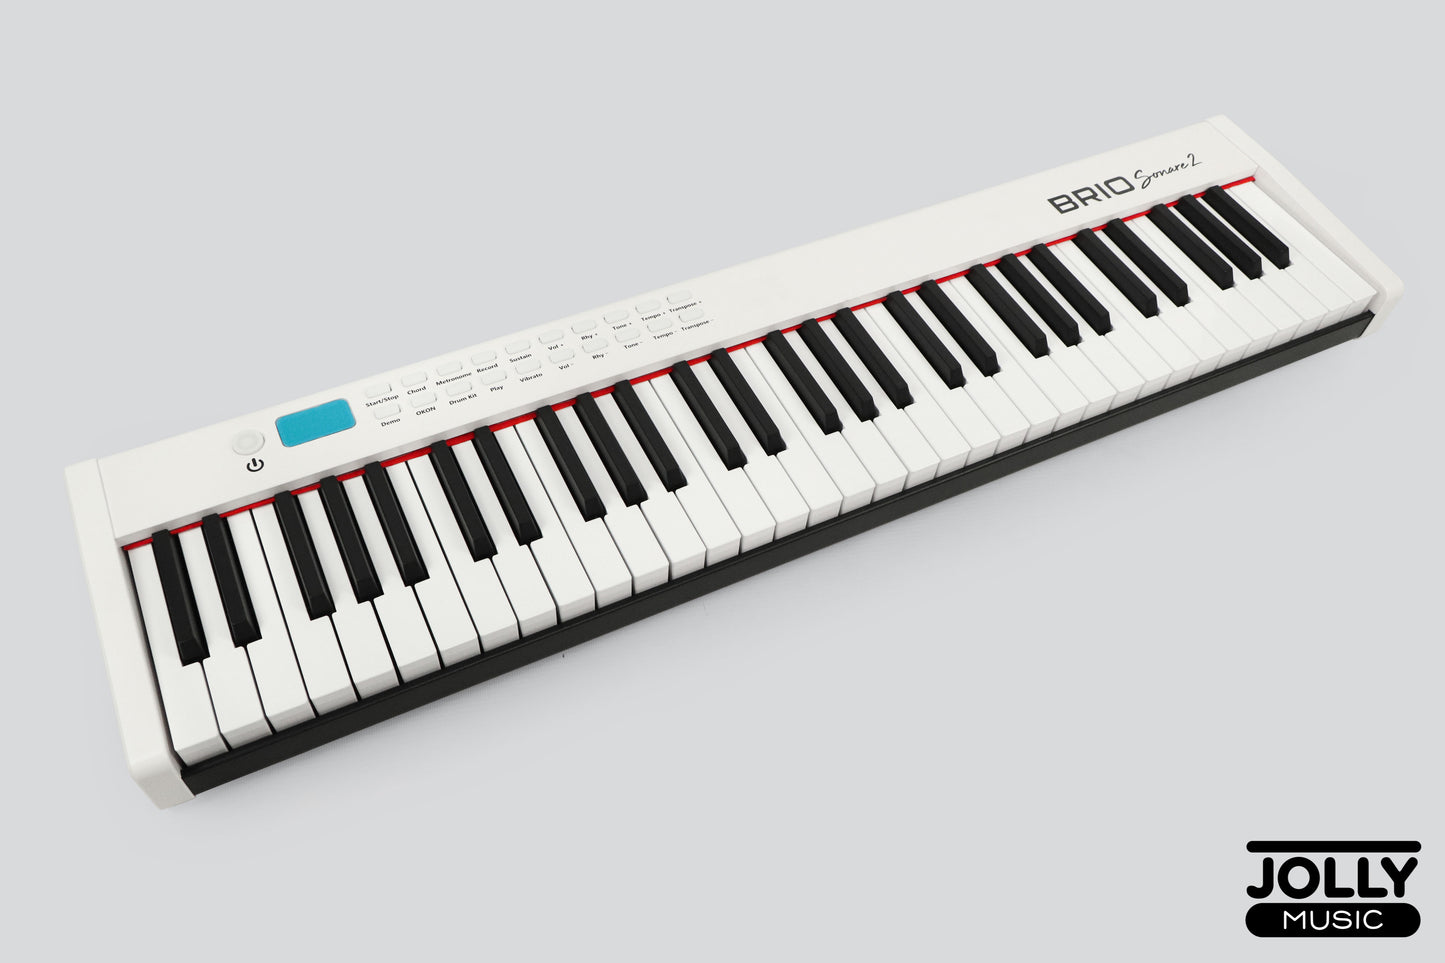 Brio BX2-61 Sonare 2 61-Key Electronic Keyboard